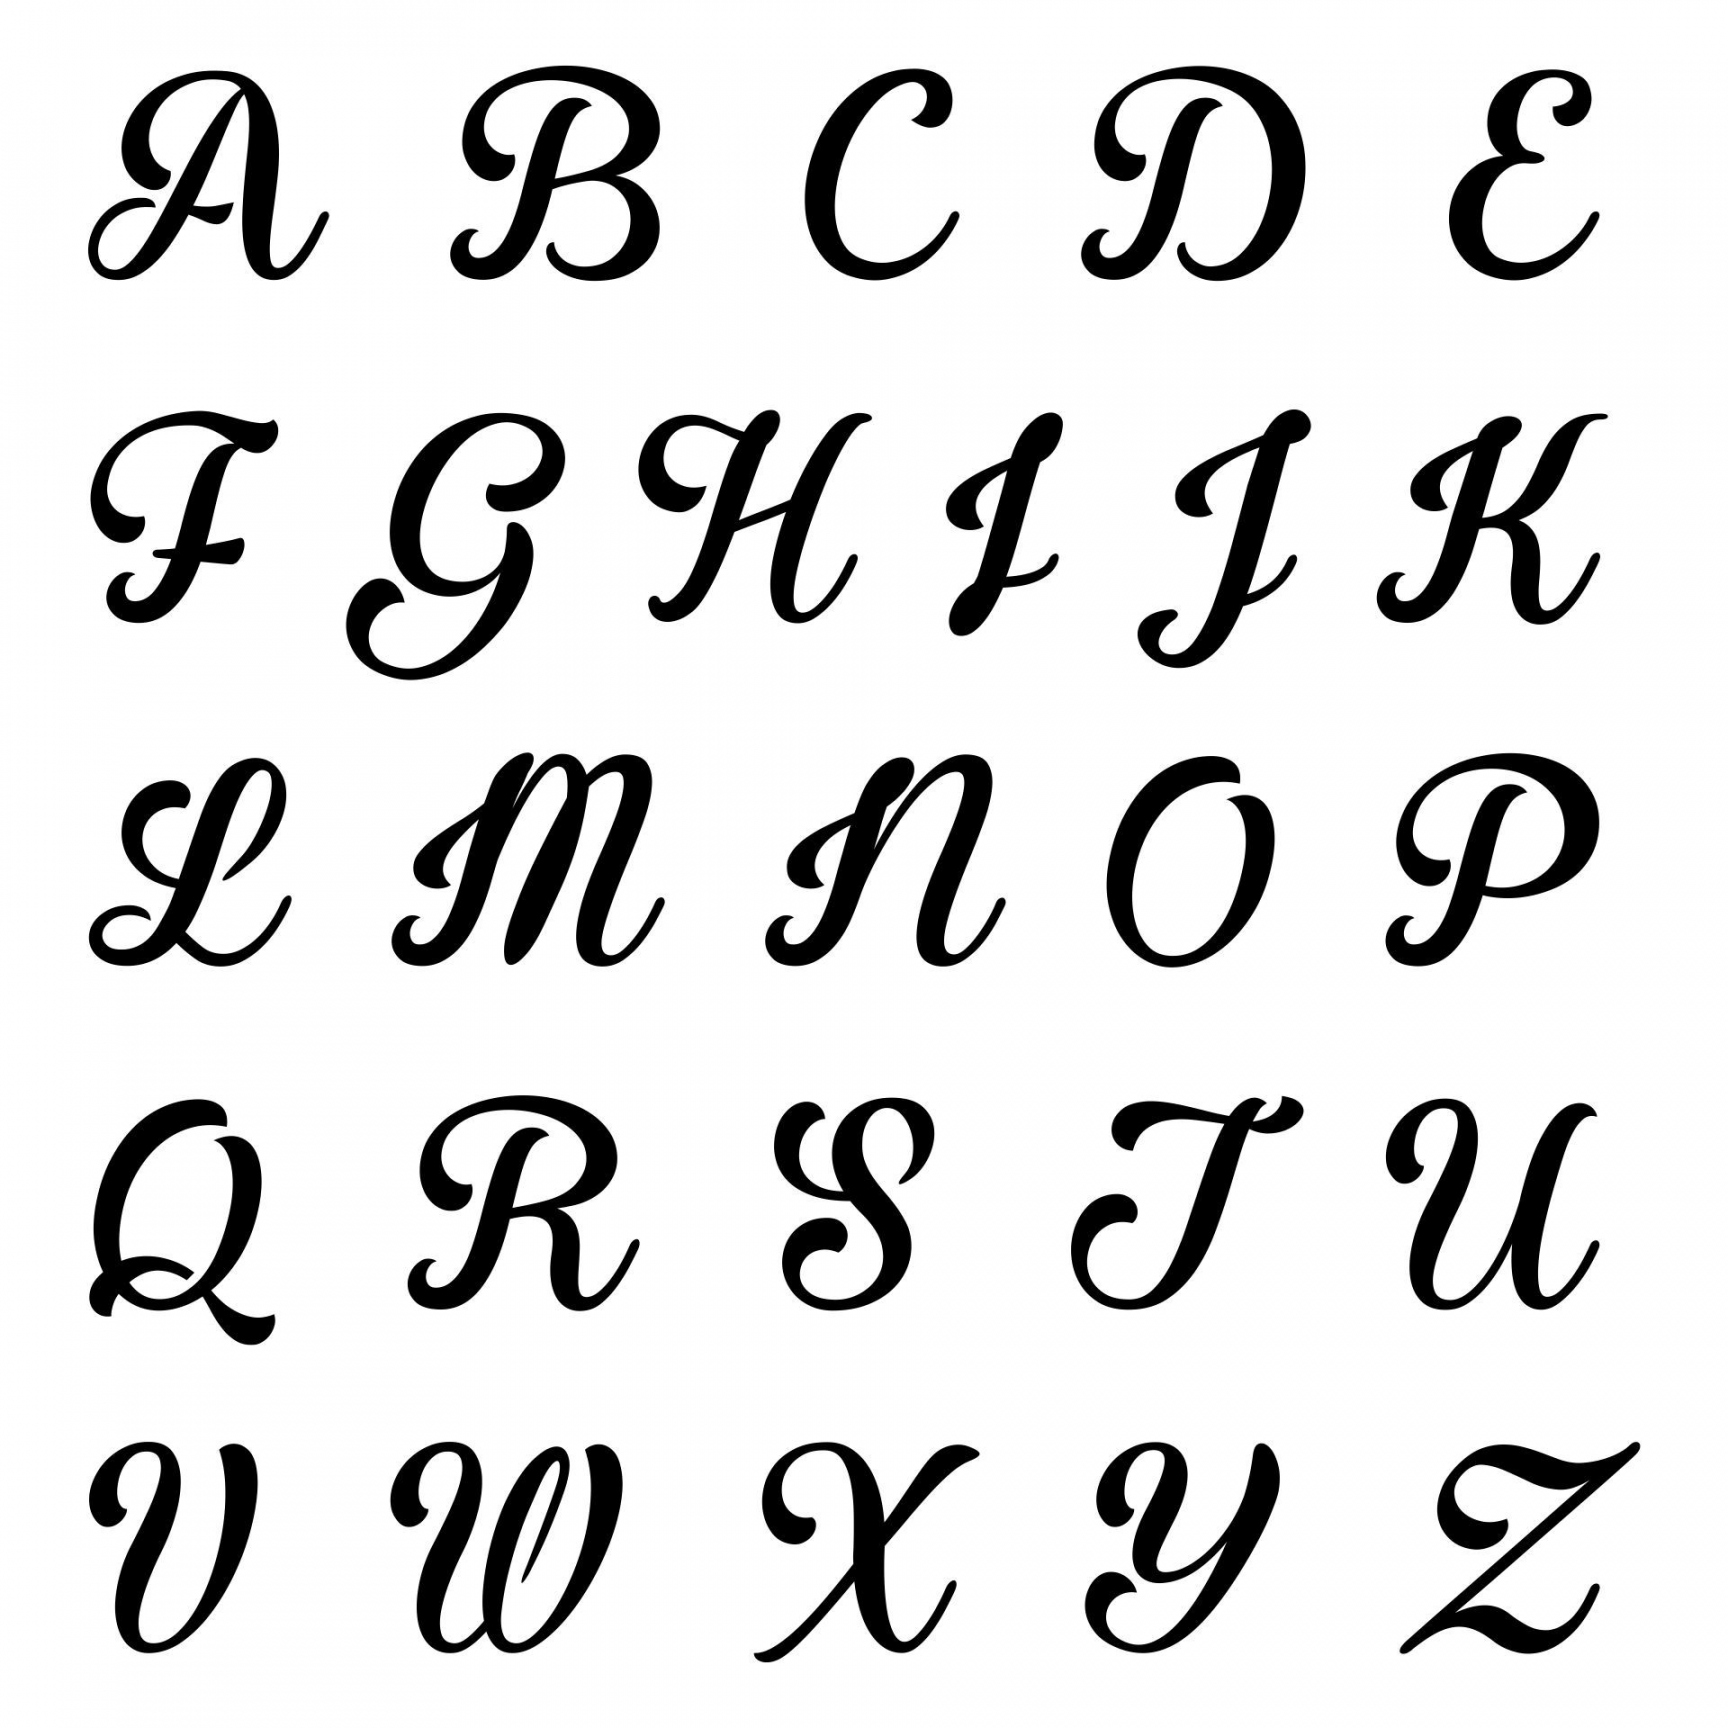 Free Printable Fancy Letter Stencils - Printable - Free Printable Fancy Letter Stencils  Free printable letter